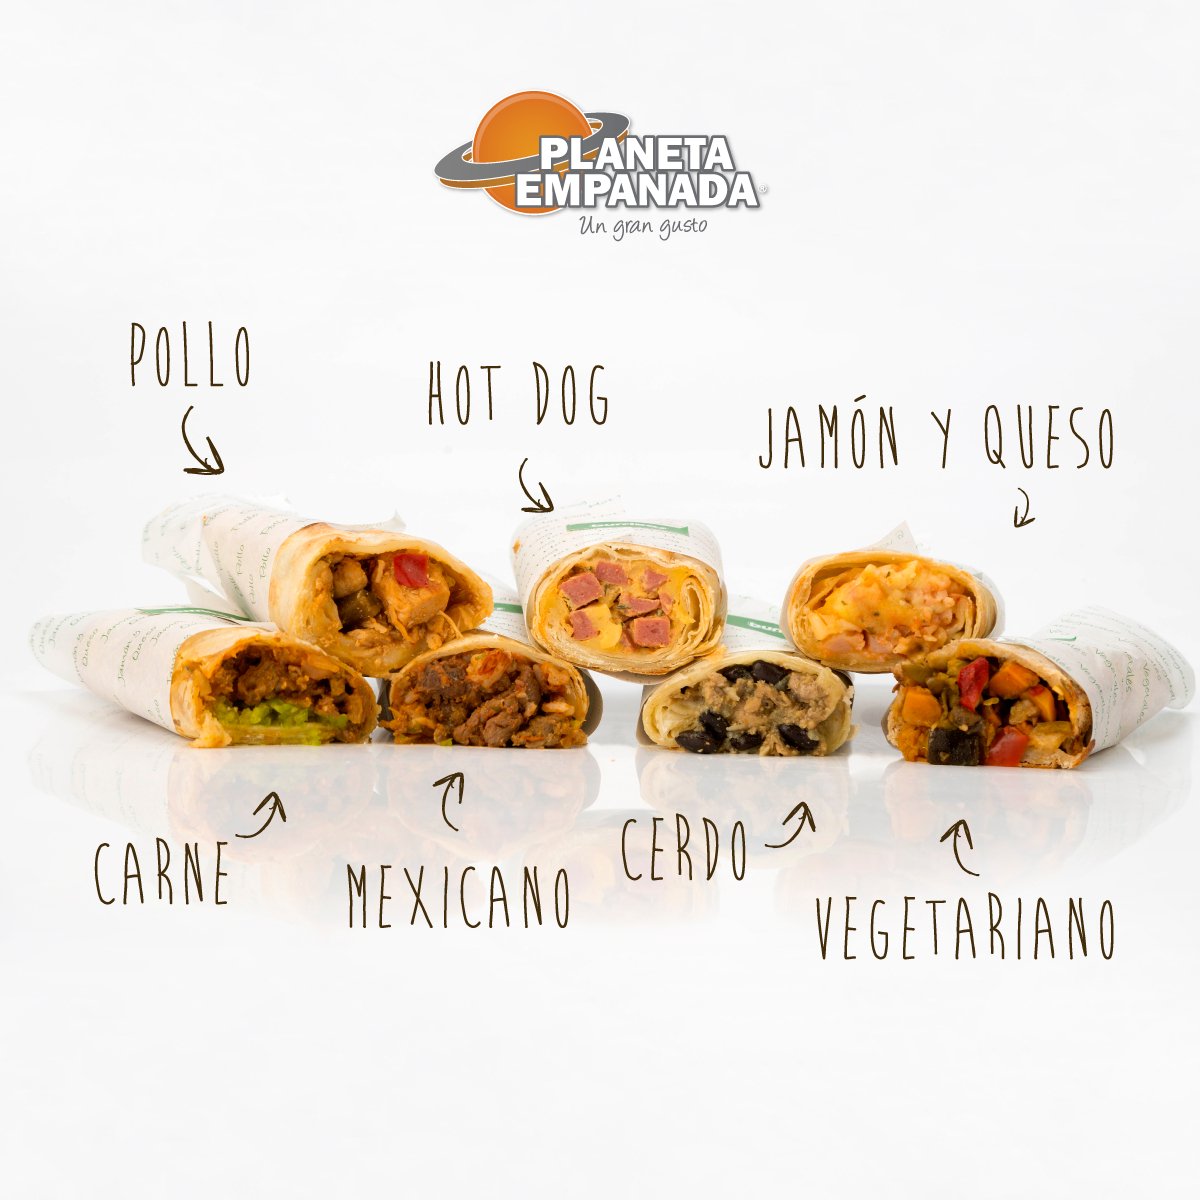 PLANETA EMPANADA burrito vegetariano Reviews